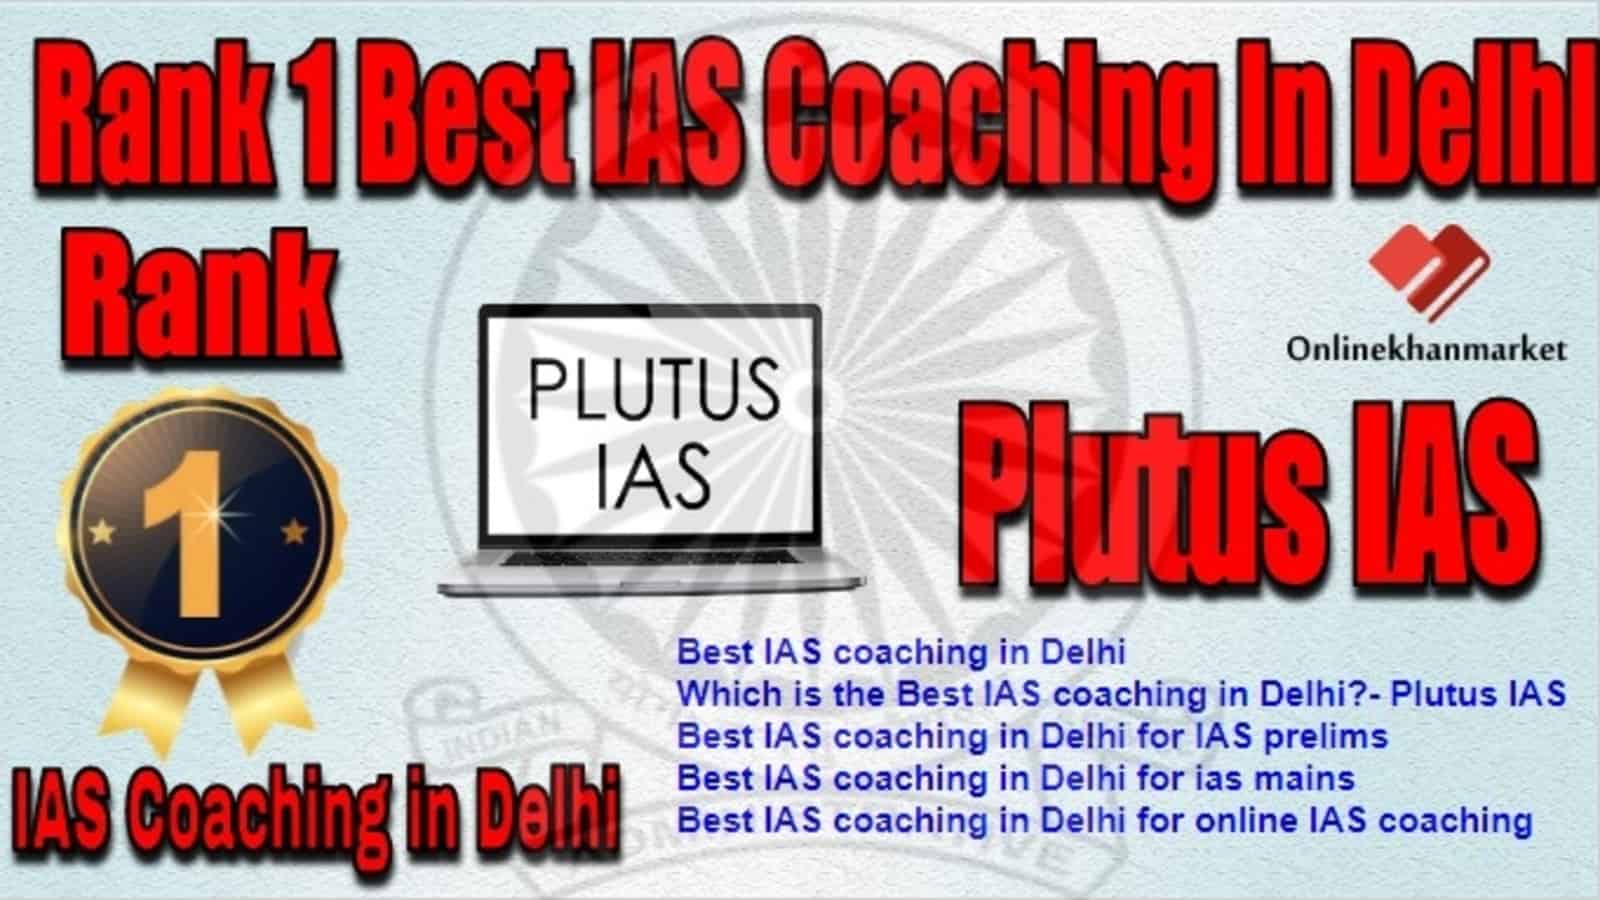 Rank 1 Best IAS Coaching in Delhi